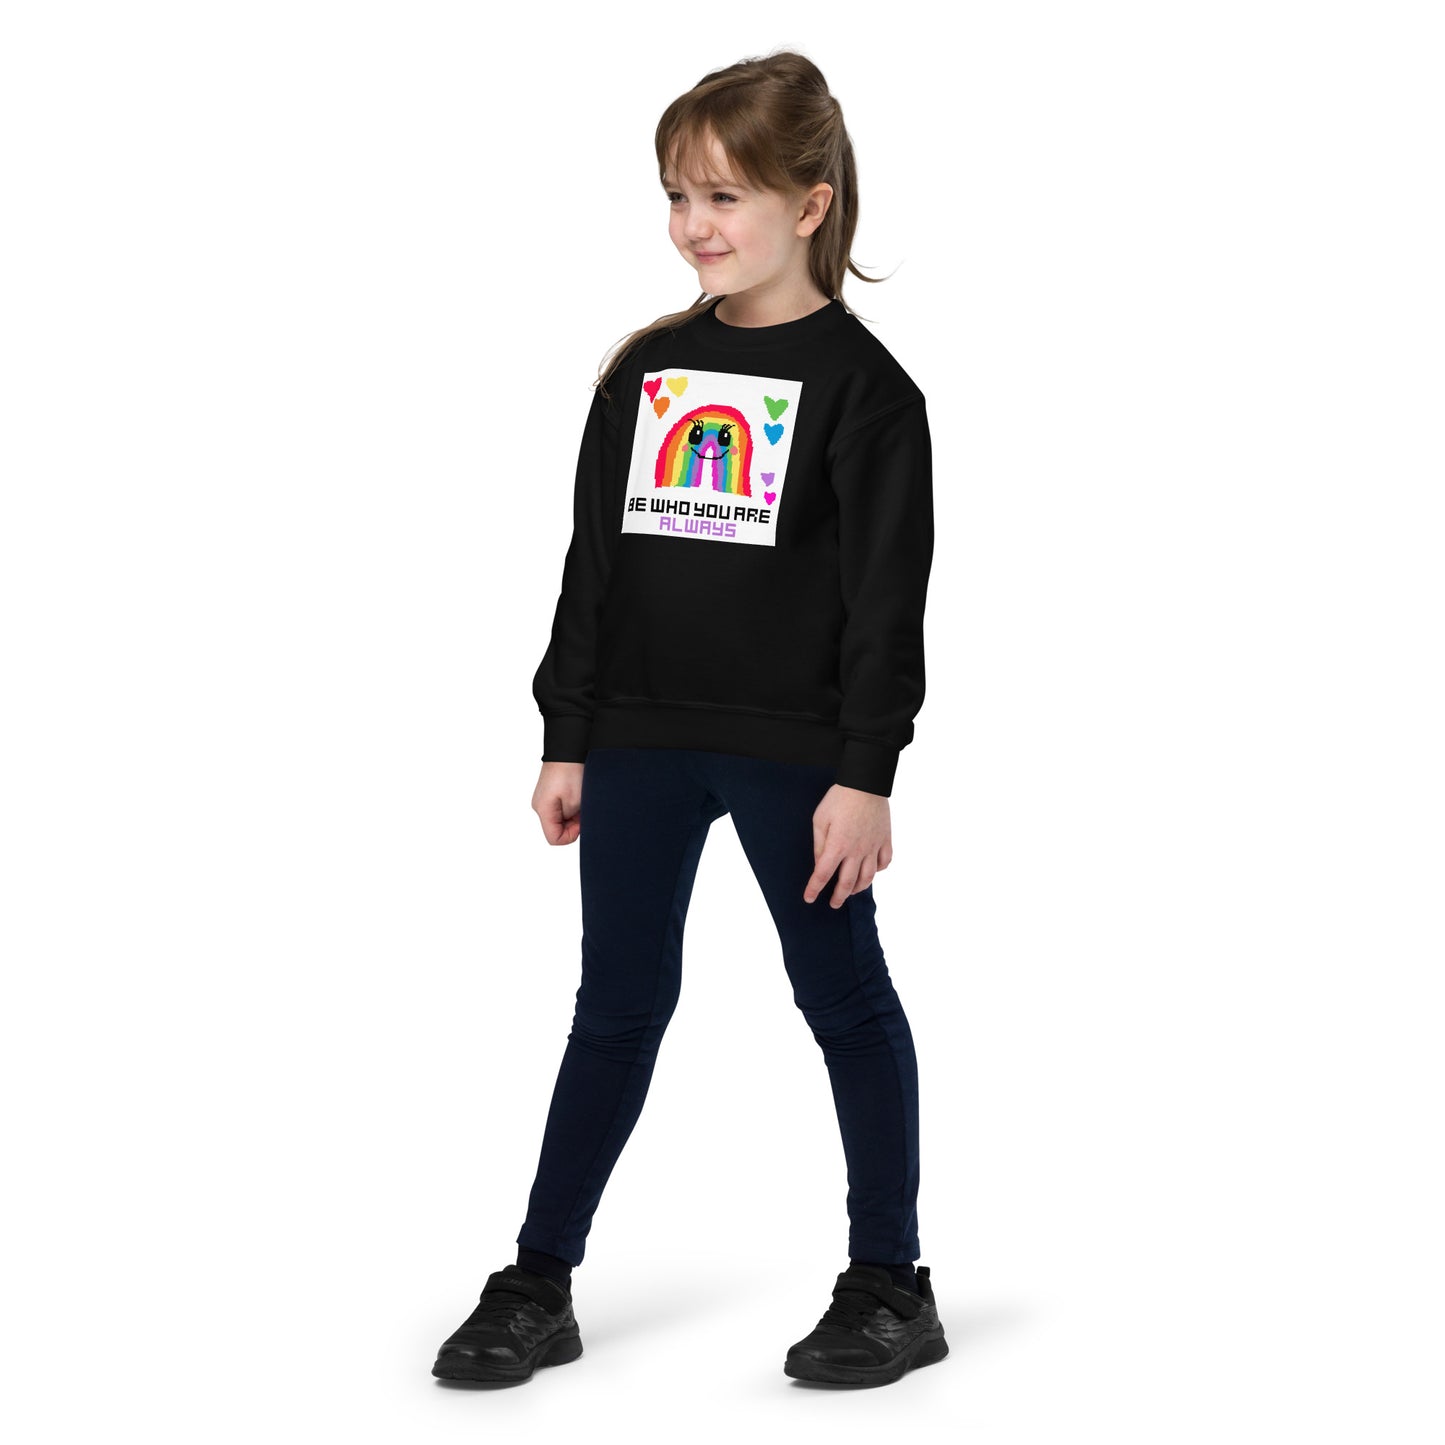 Pixel Drops Youth crewneck sweatshirt